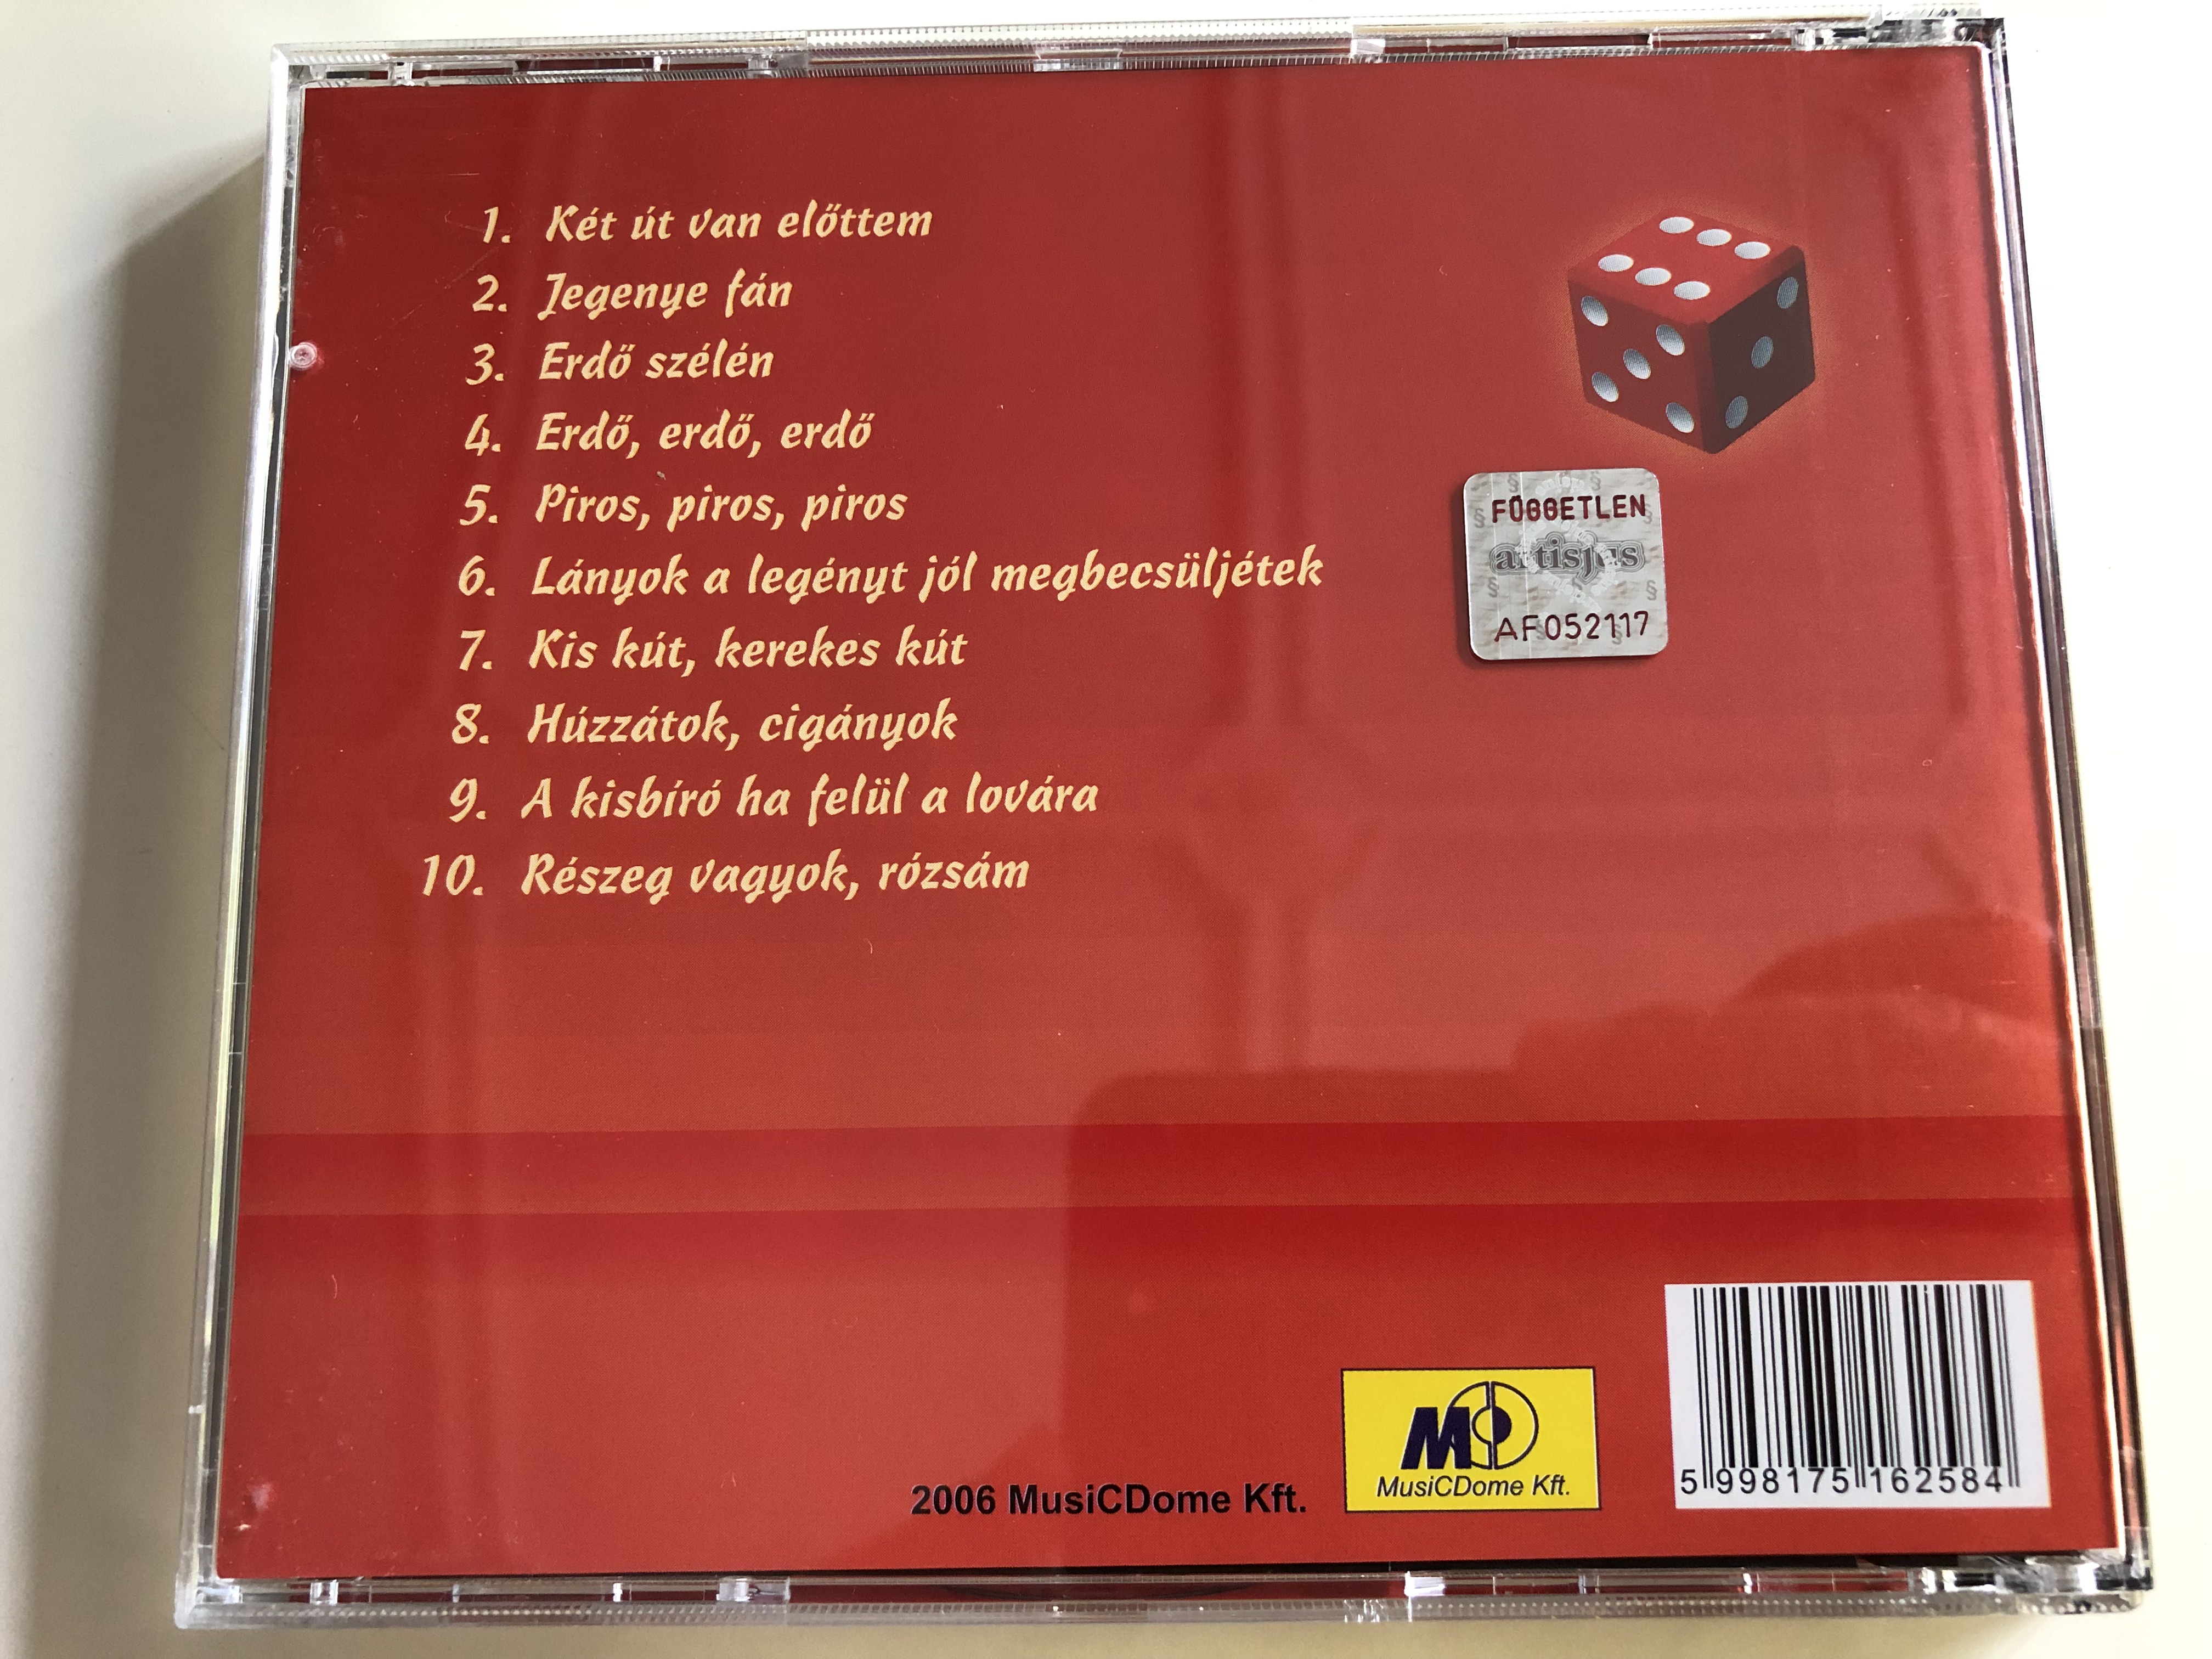 mcd-mulat-s-piros-piros-piros-n-pdalok-modern-mulat-s-k-nt-sben-audio-cd-2006-0512mcd-hungarian-folk-music-4-.jpg